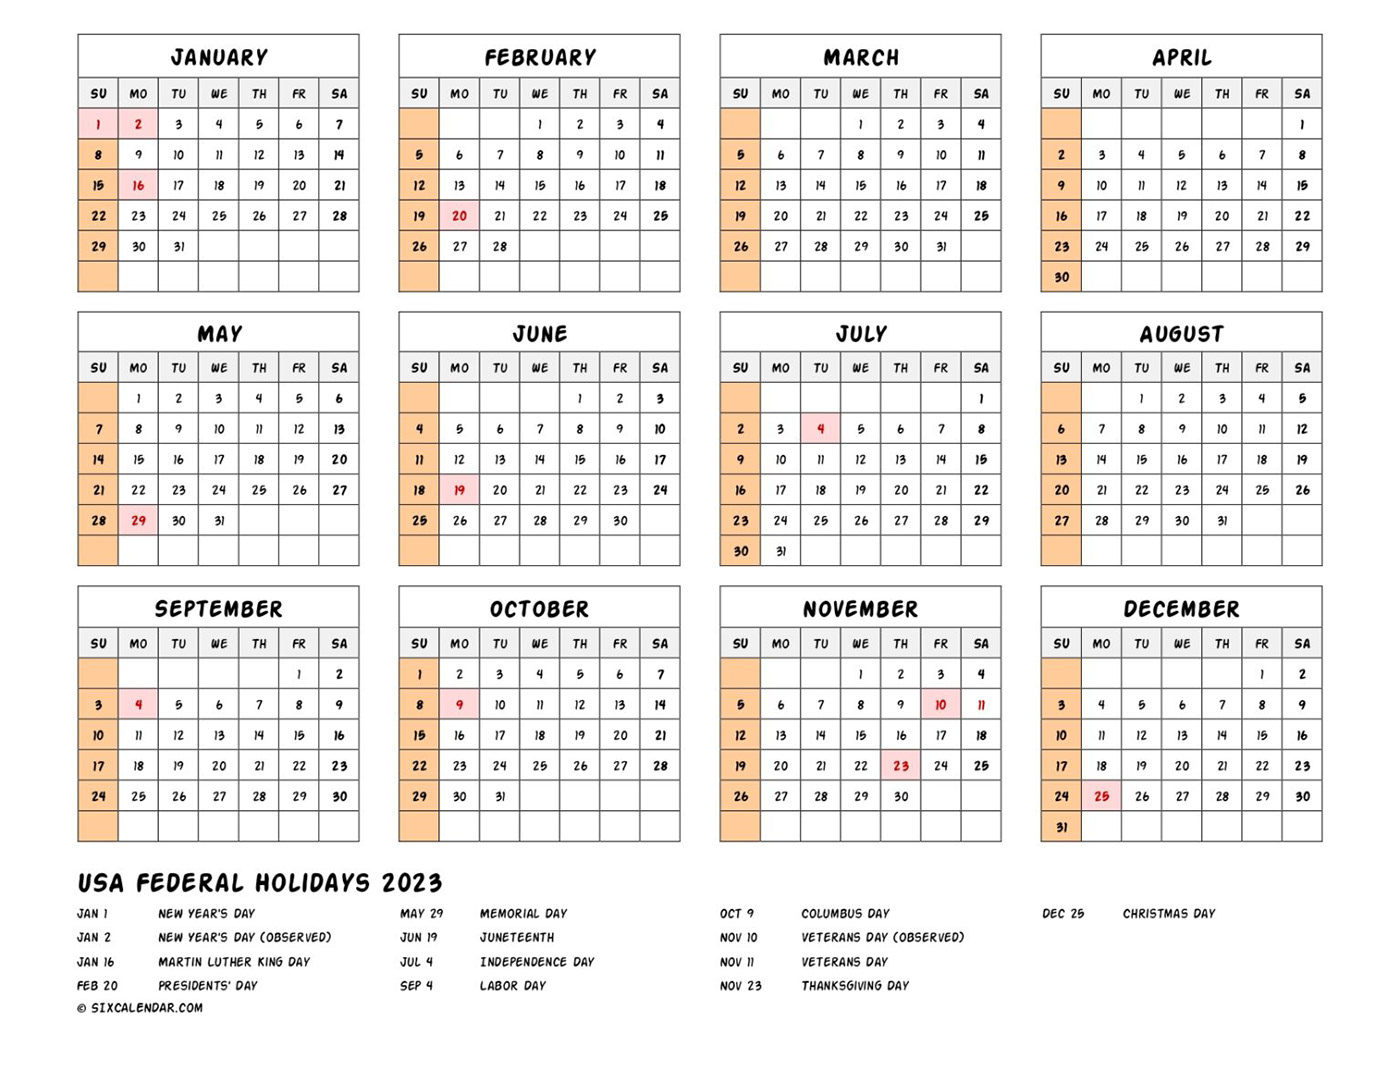 2023 calendar calendar calendar 2023 calendar design calendars new year